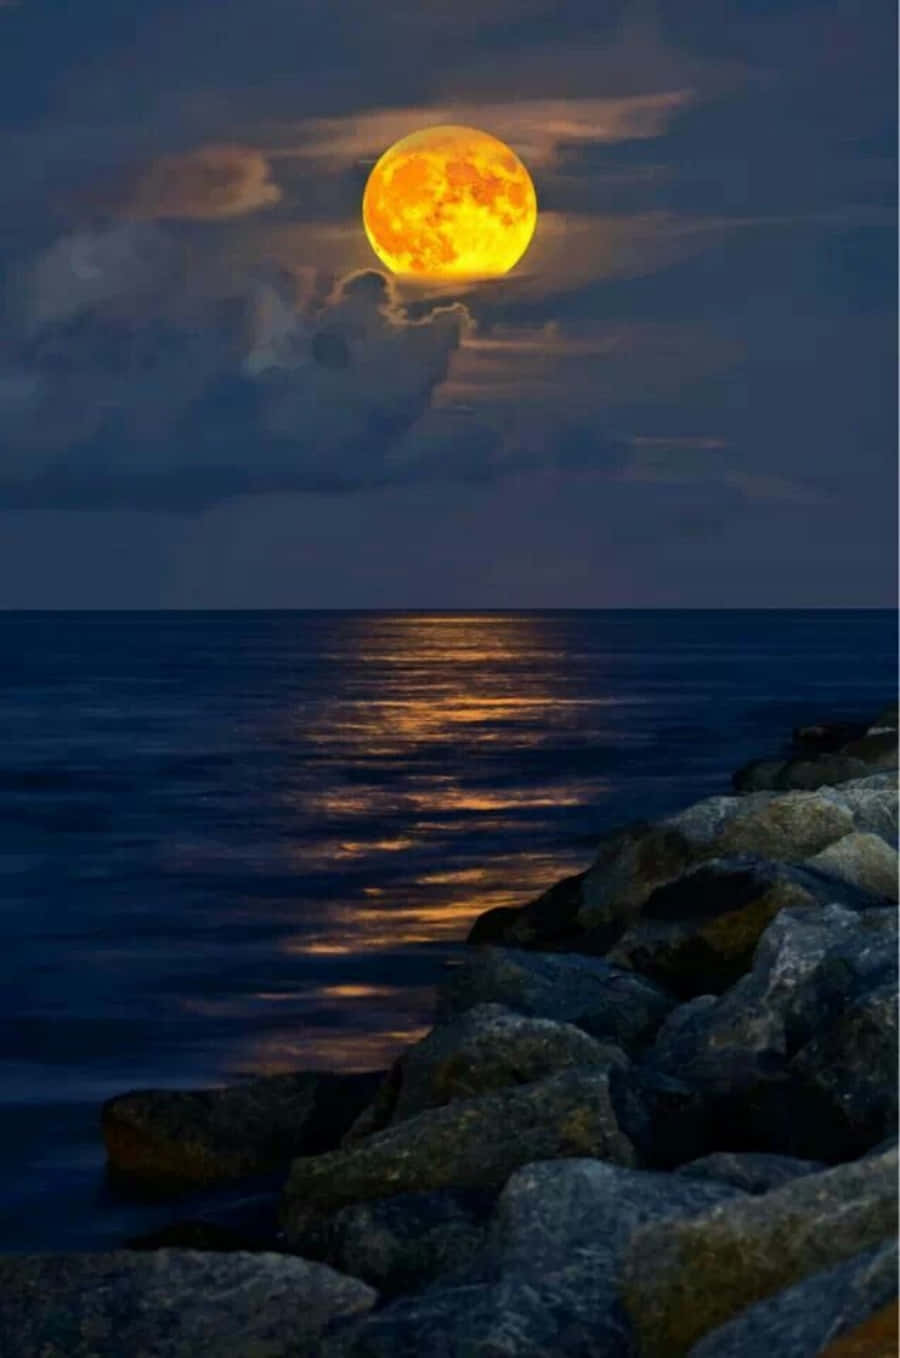 Make a wish and gaze in awe at this beautiful moon